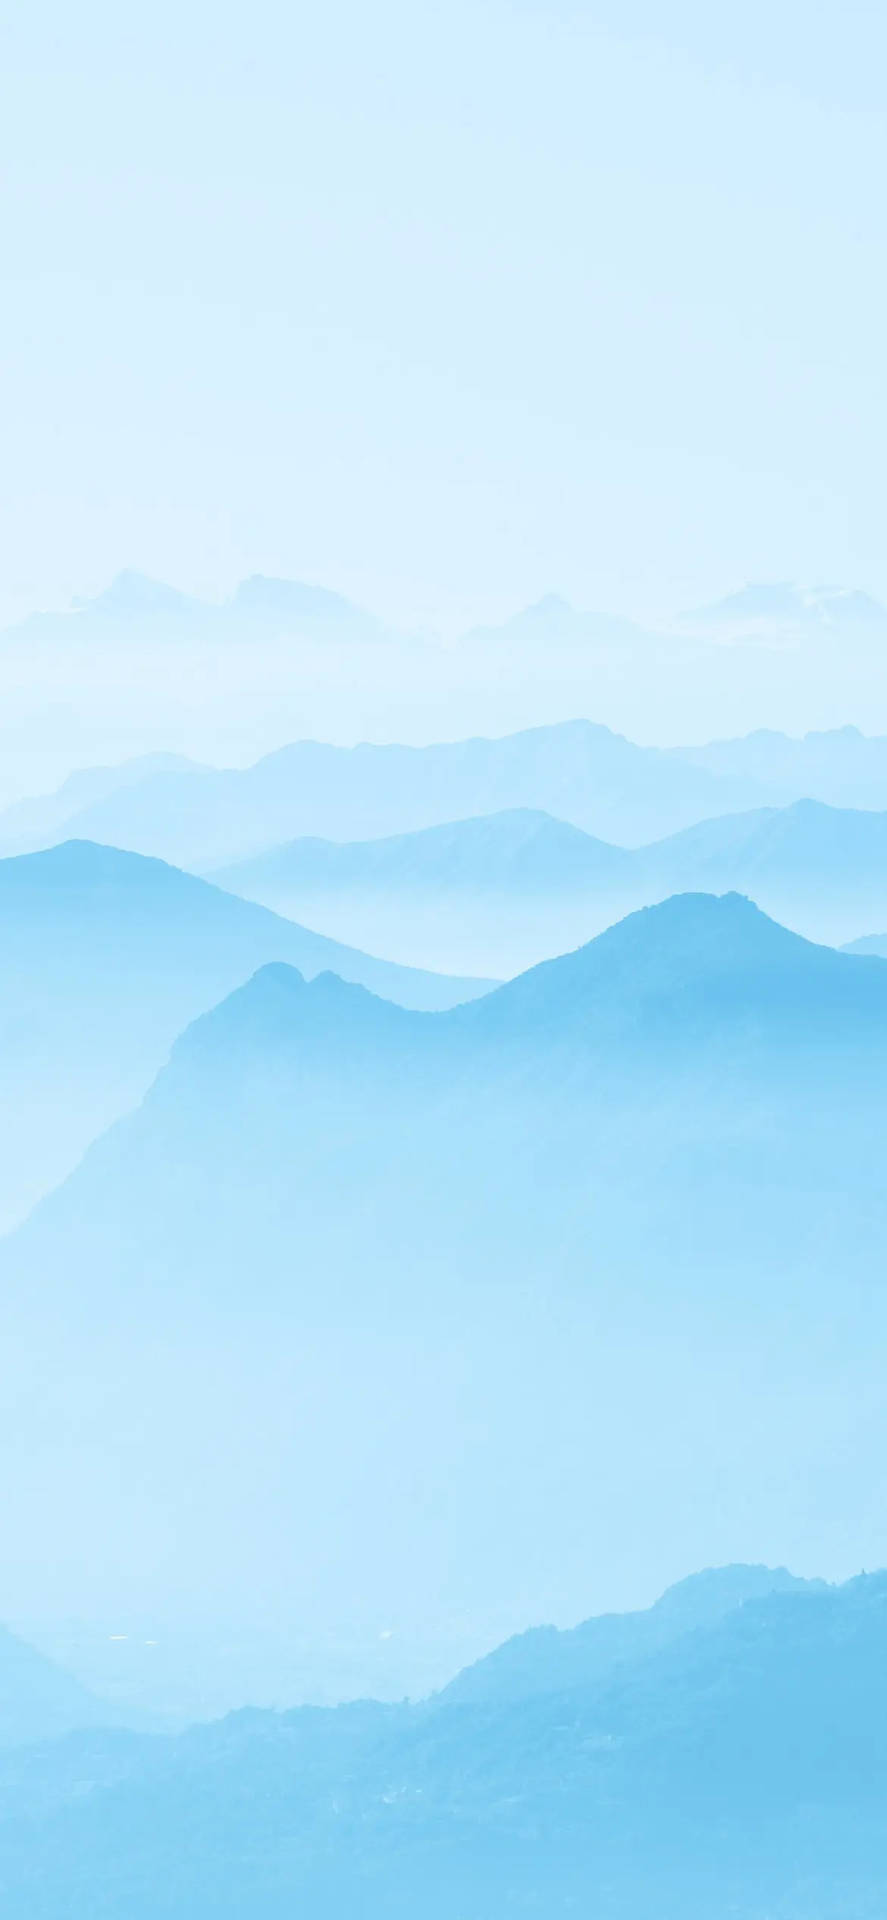 Mountain Art Light Blue Aesthetic iPhone Wallpaper